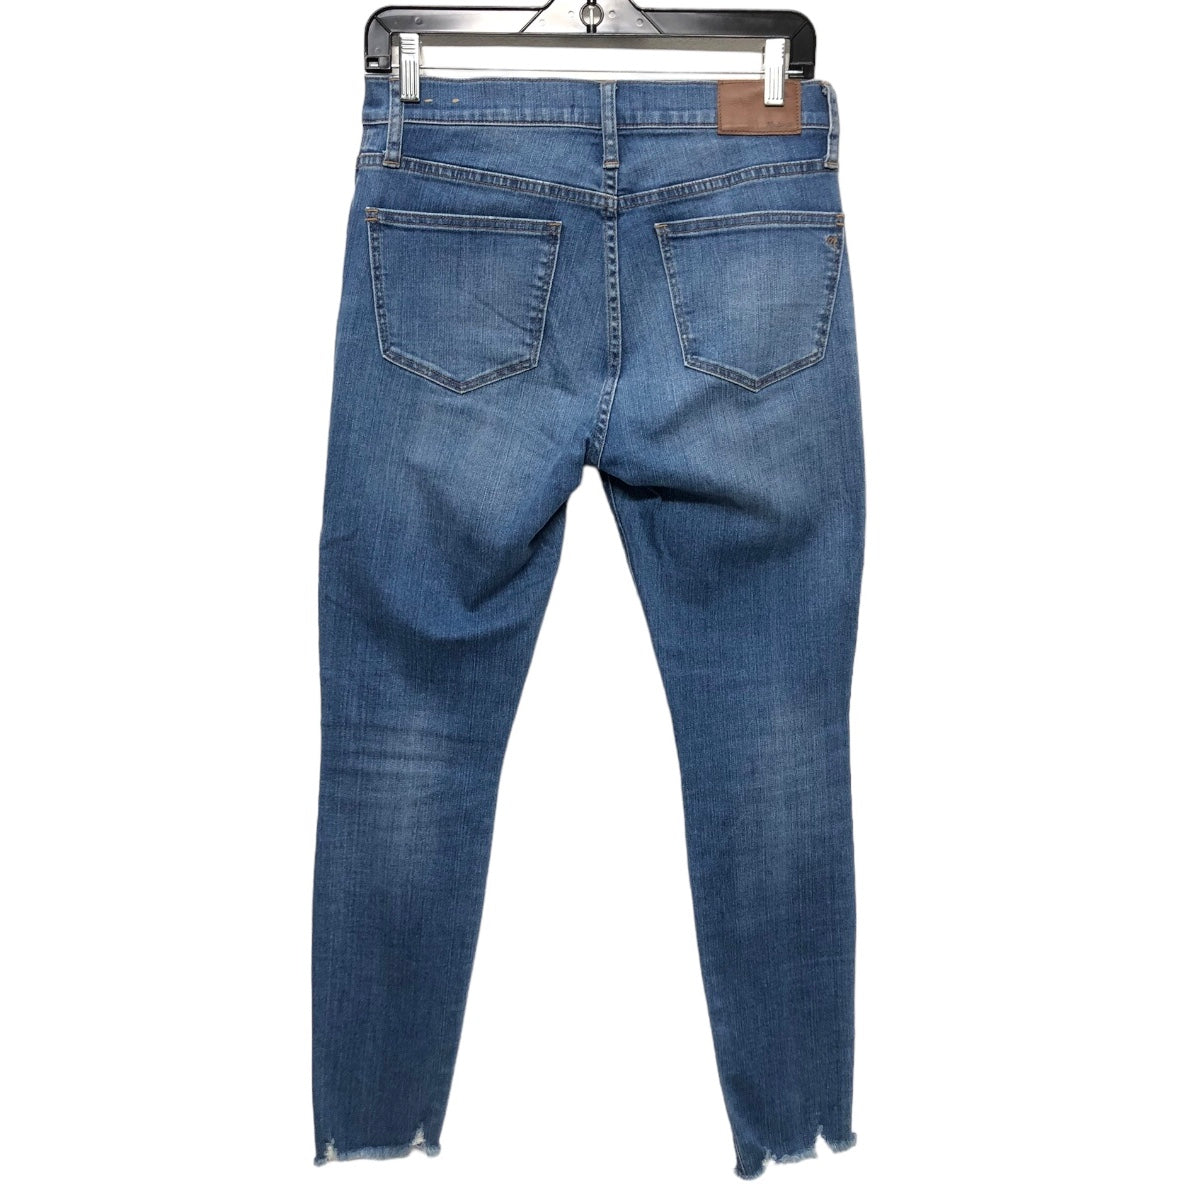 Blue Denim Jeans Skinny Madewell, Size 4